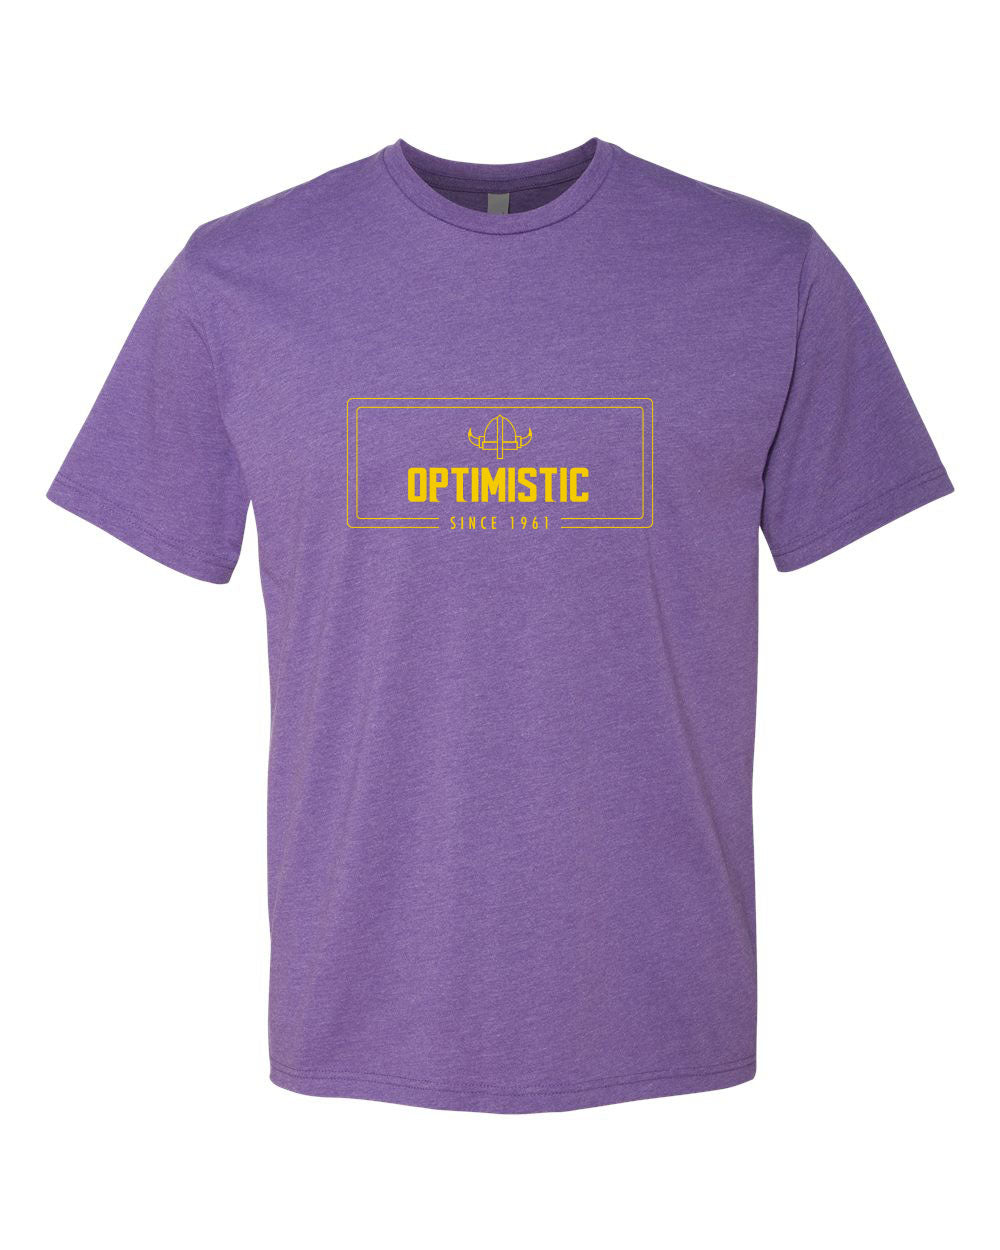 Optimistic Since 1961 Shirt